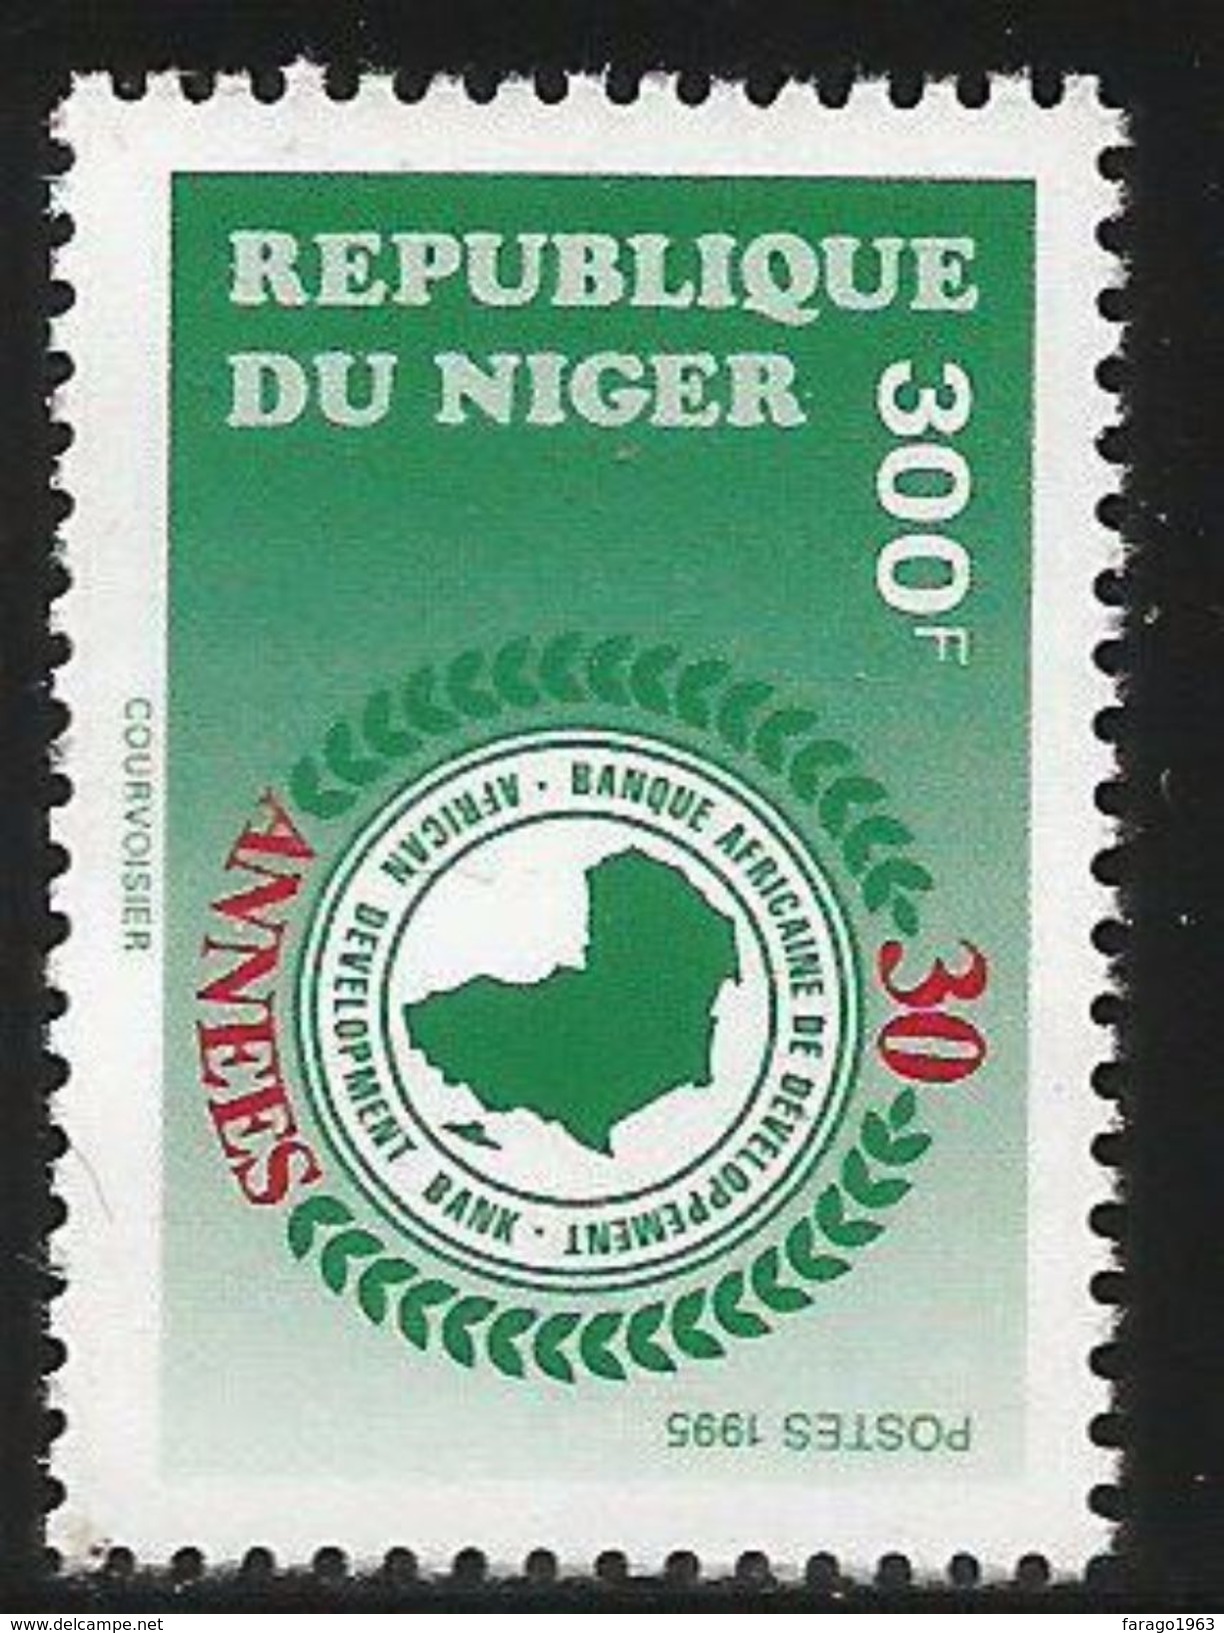 1995 Niger African Development Bank Complete Set Of 1 MNH - Niger (1960-...)